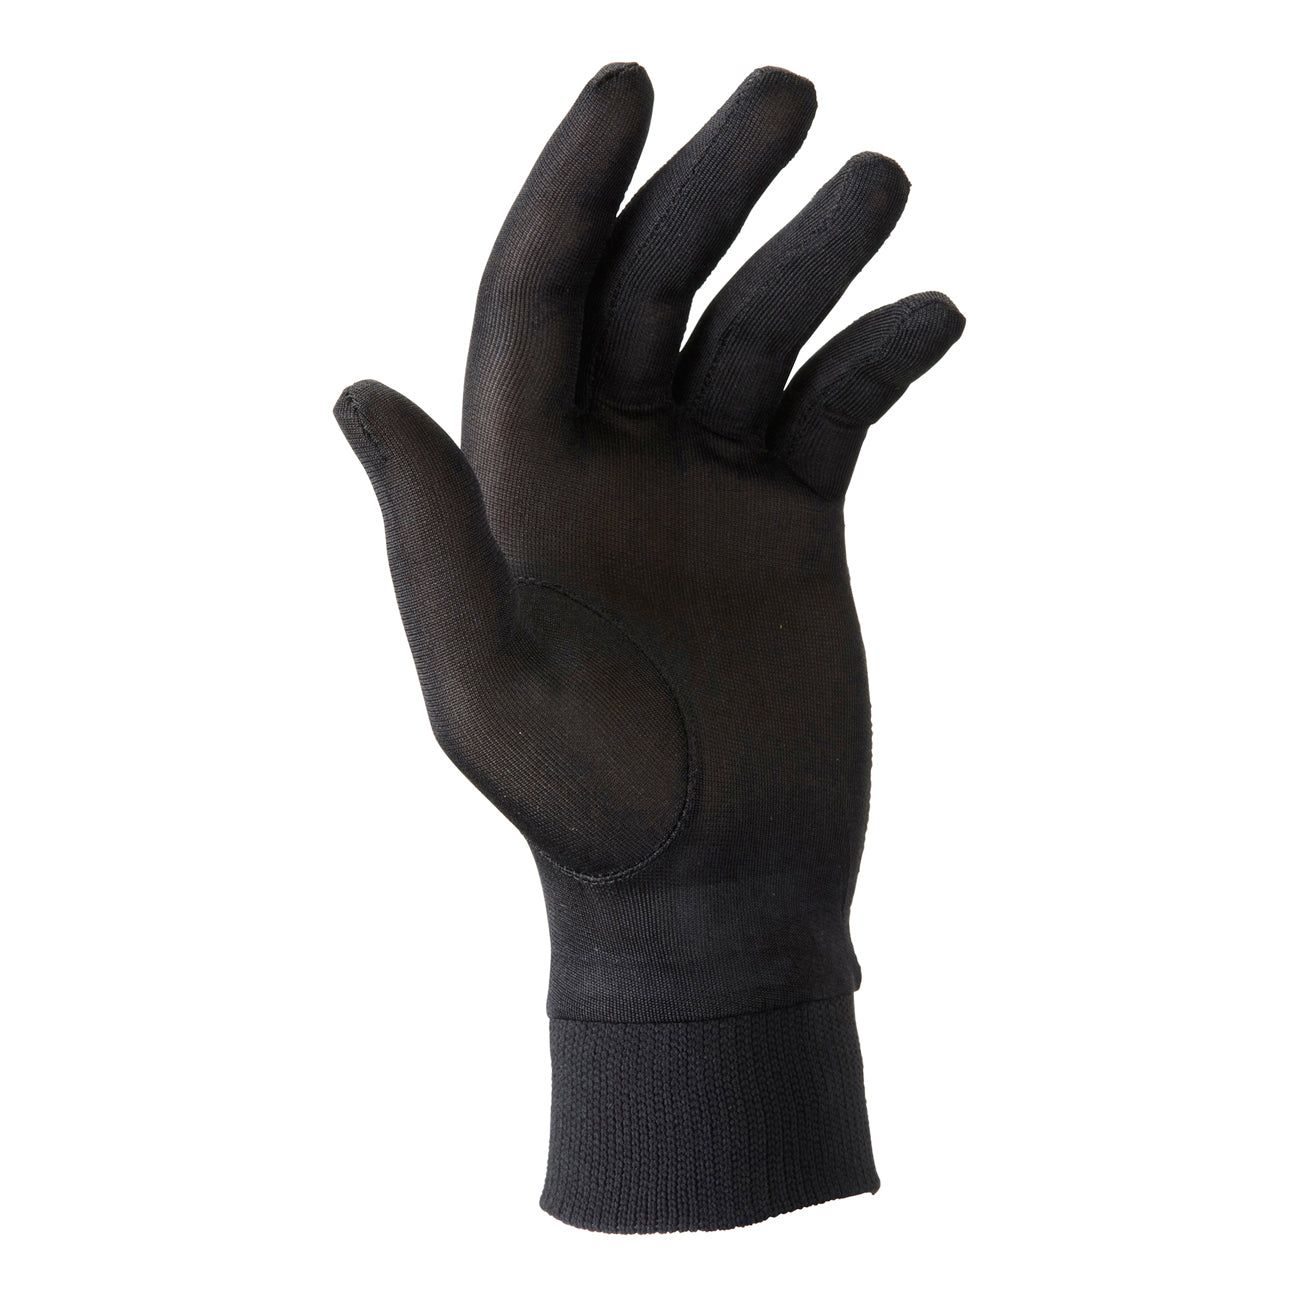 Manbi Merino 240 Glove Liner - Black